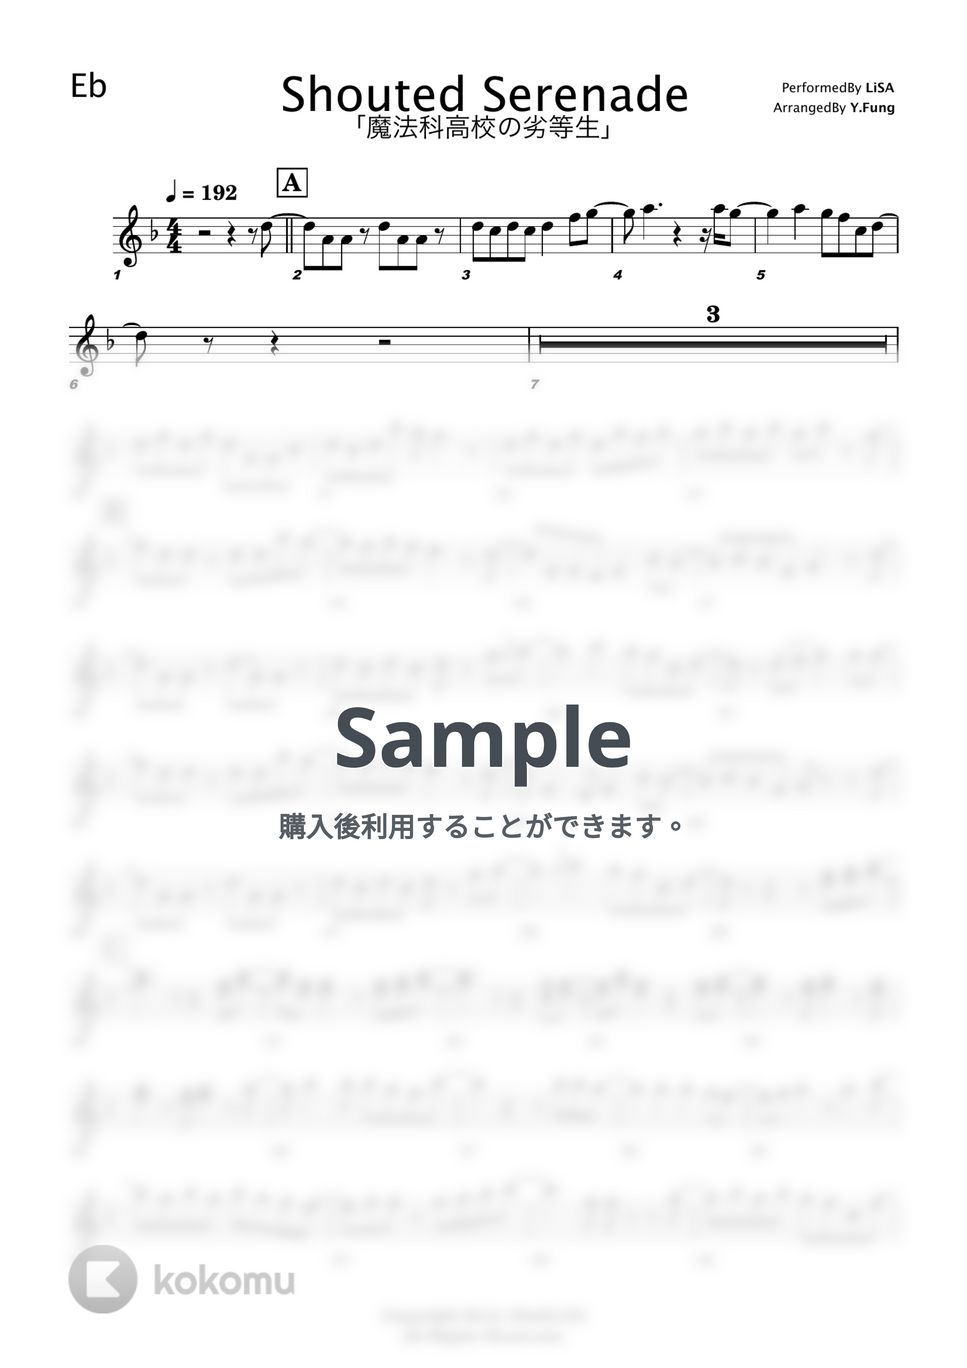 LiSA - Shouted Serenade - 魔法科高校の劣等生 S3OP (C/ Bb/ F/ Eb  キー 演奏樂譜) by FungYip